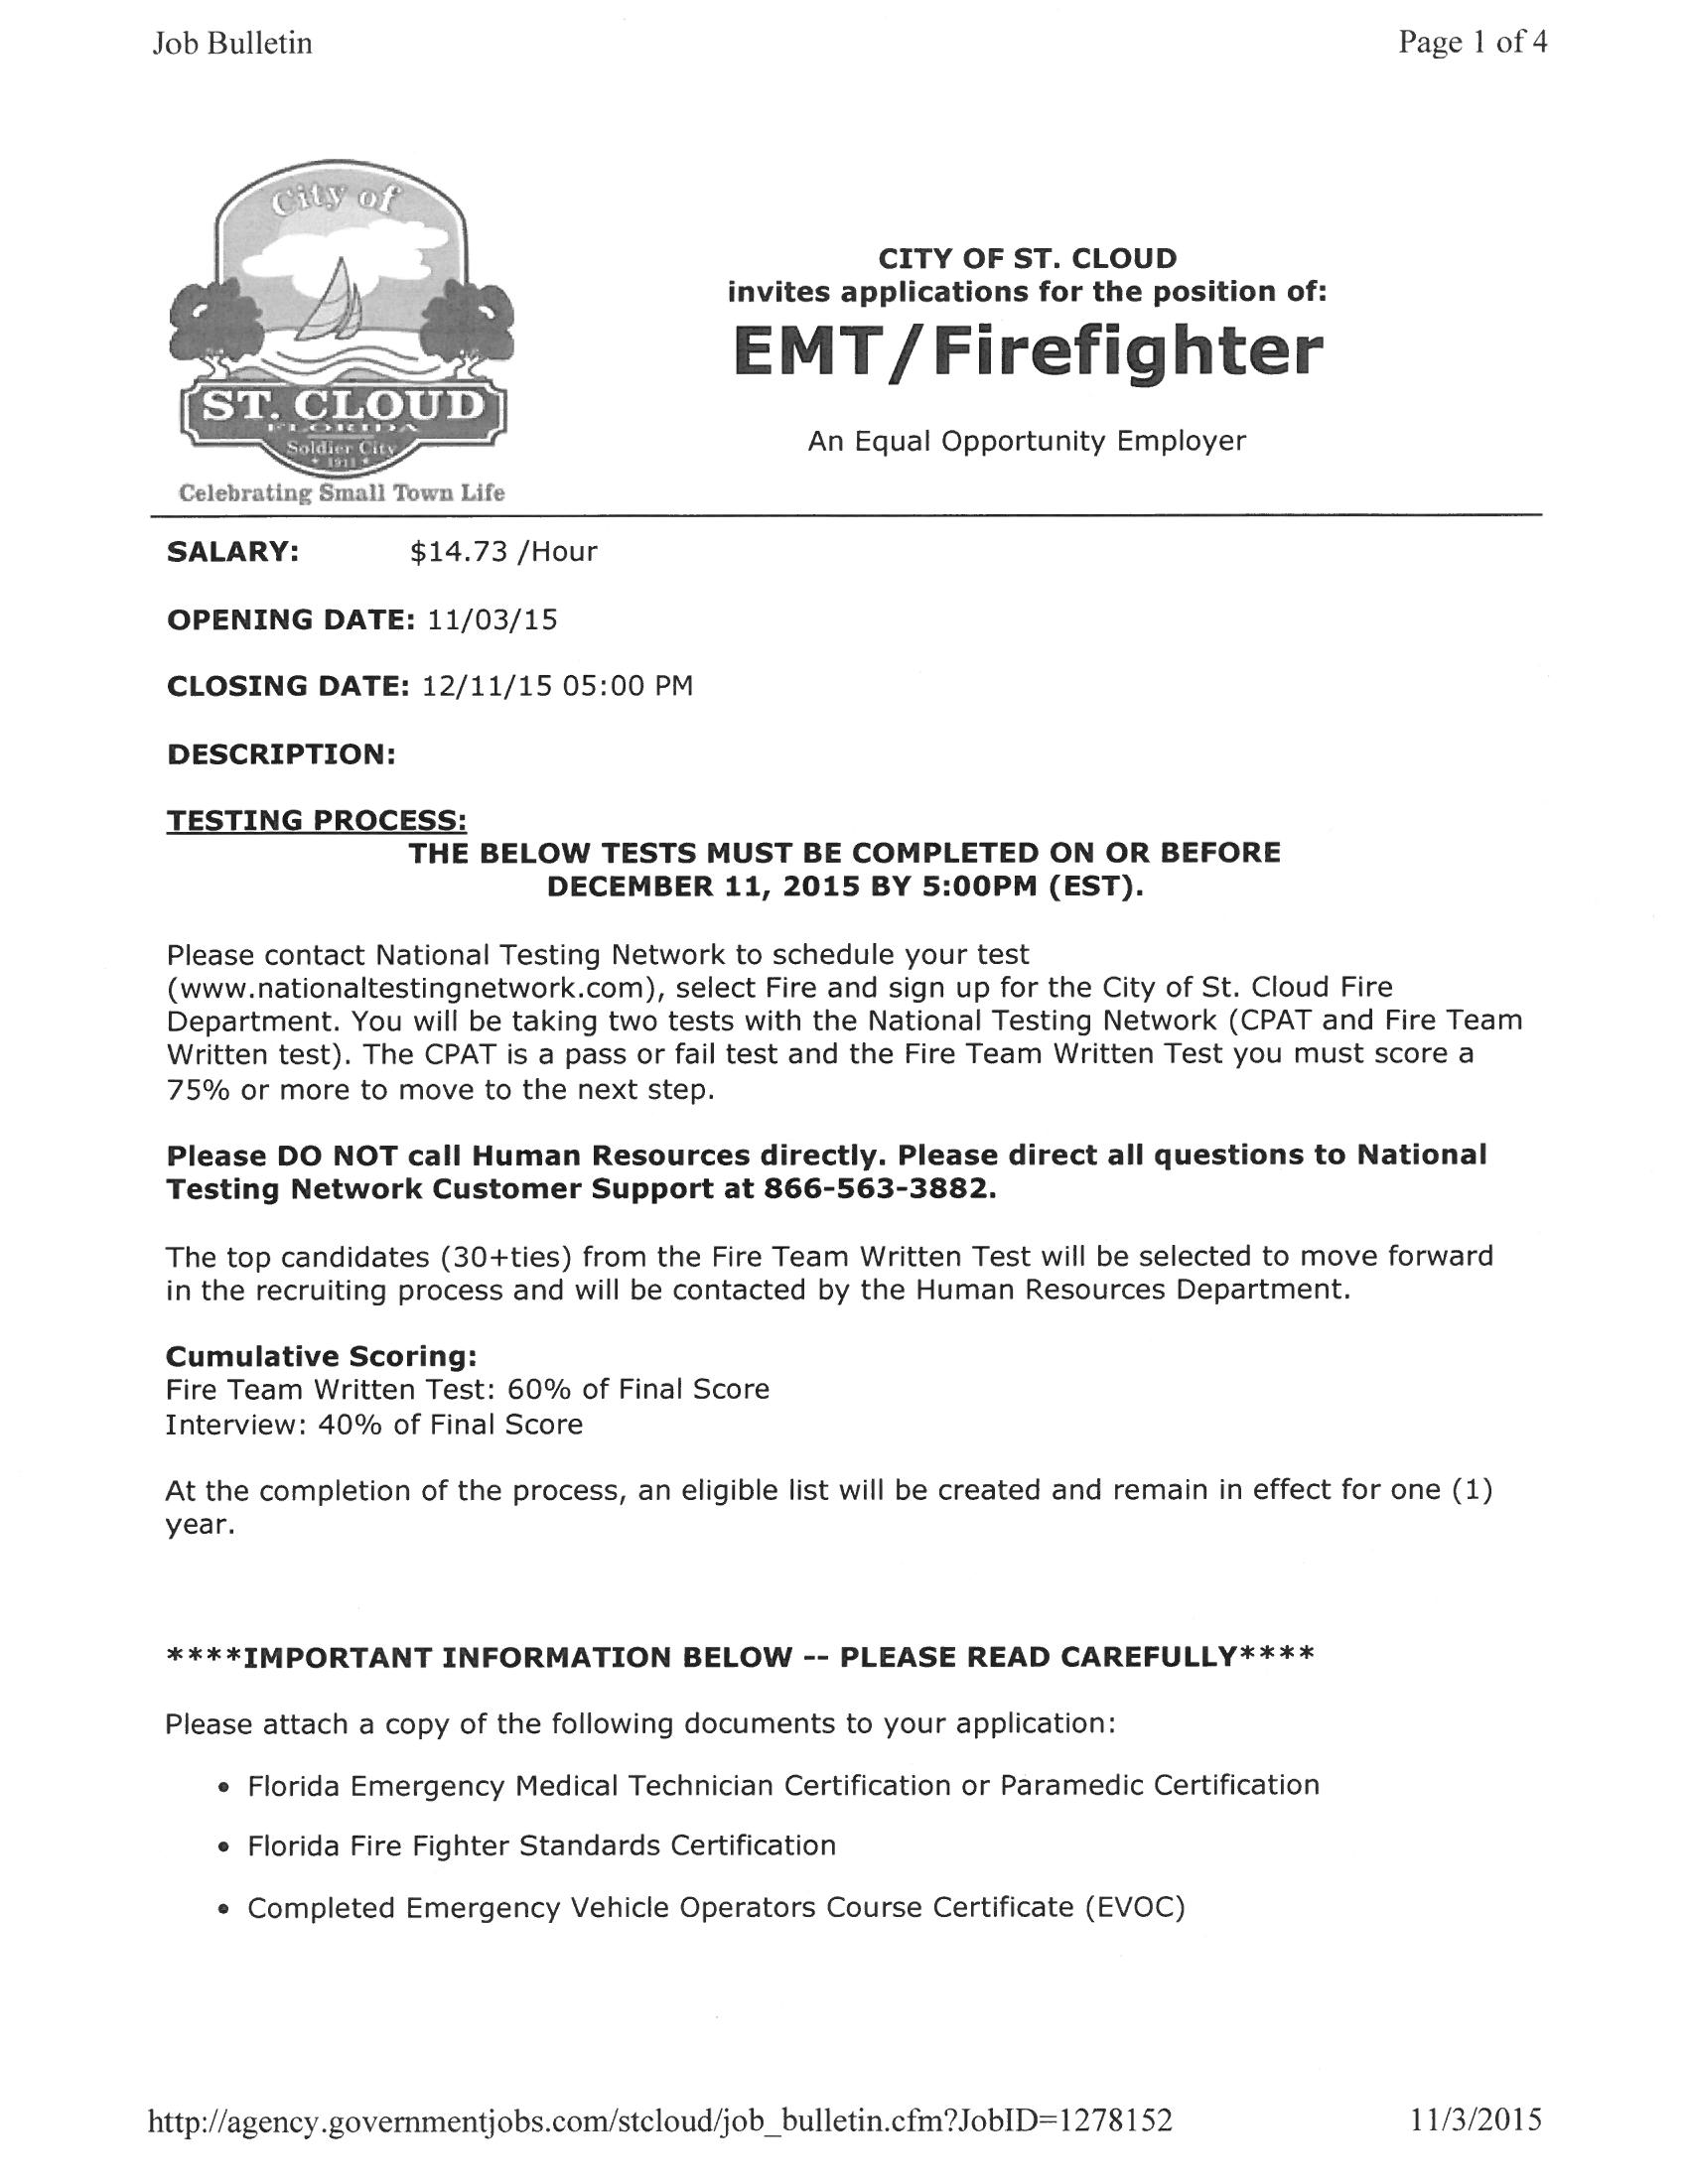 City of St. Cloud Hiring EMT/FF